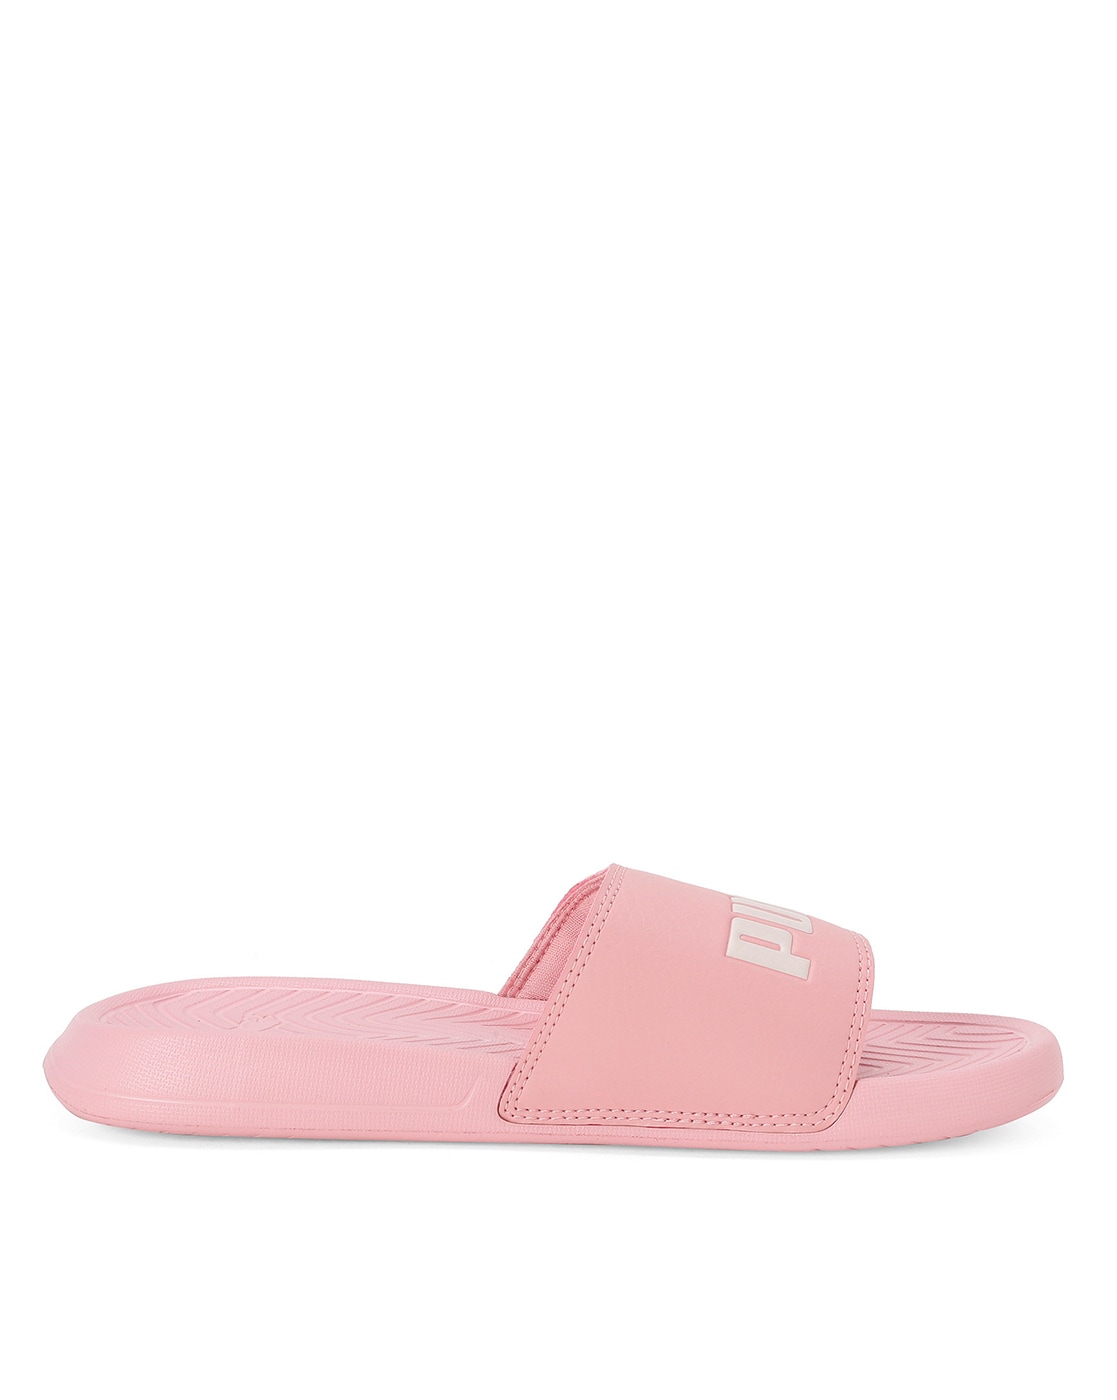 puma slippers women